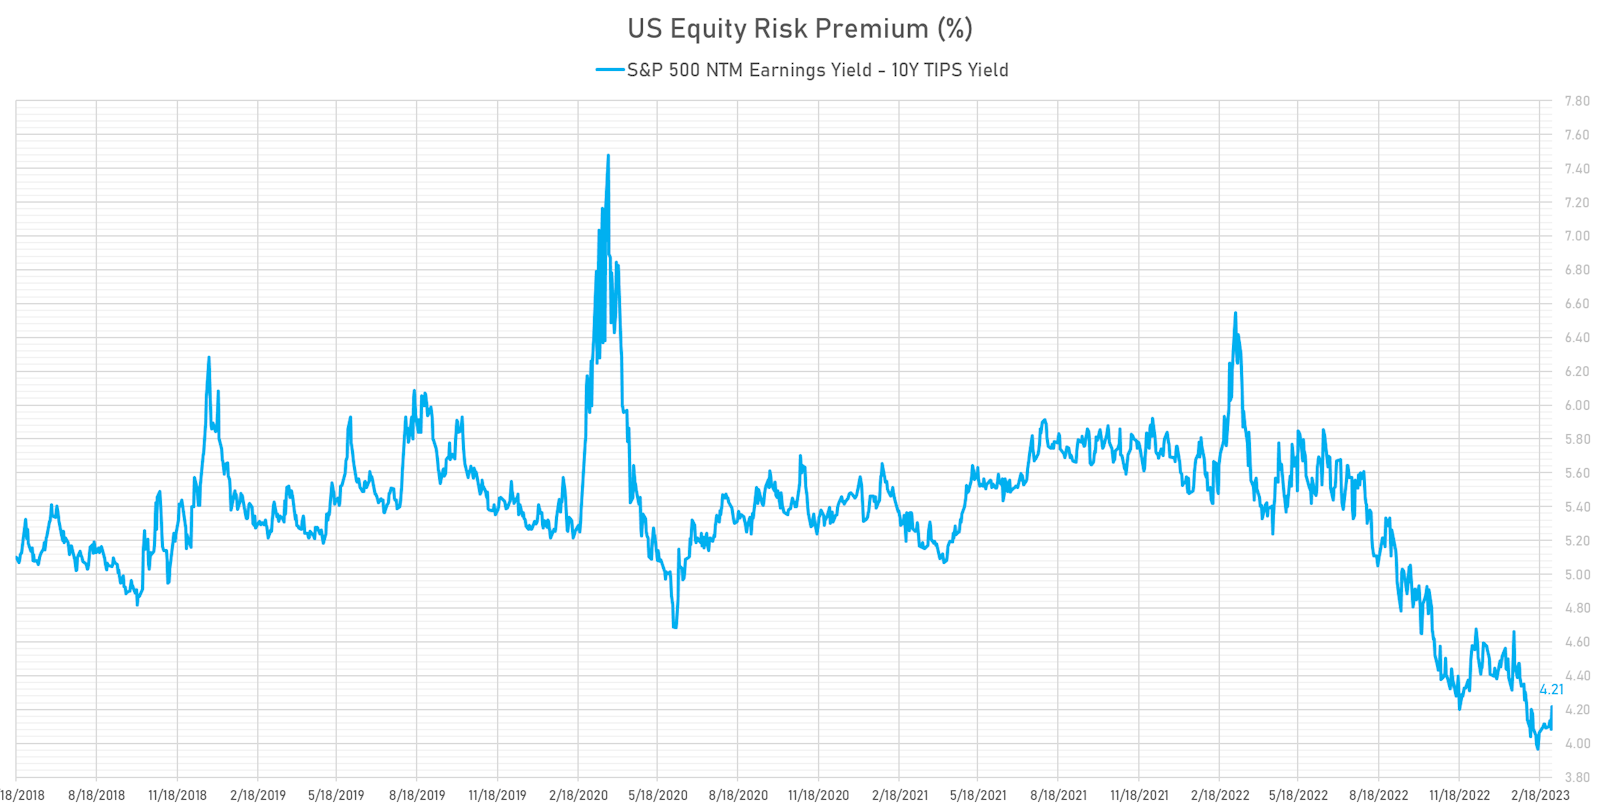 US Equity Risk Premium | Sources: phipost.com, Refinitiv & FactSet data